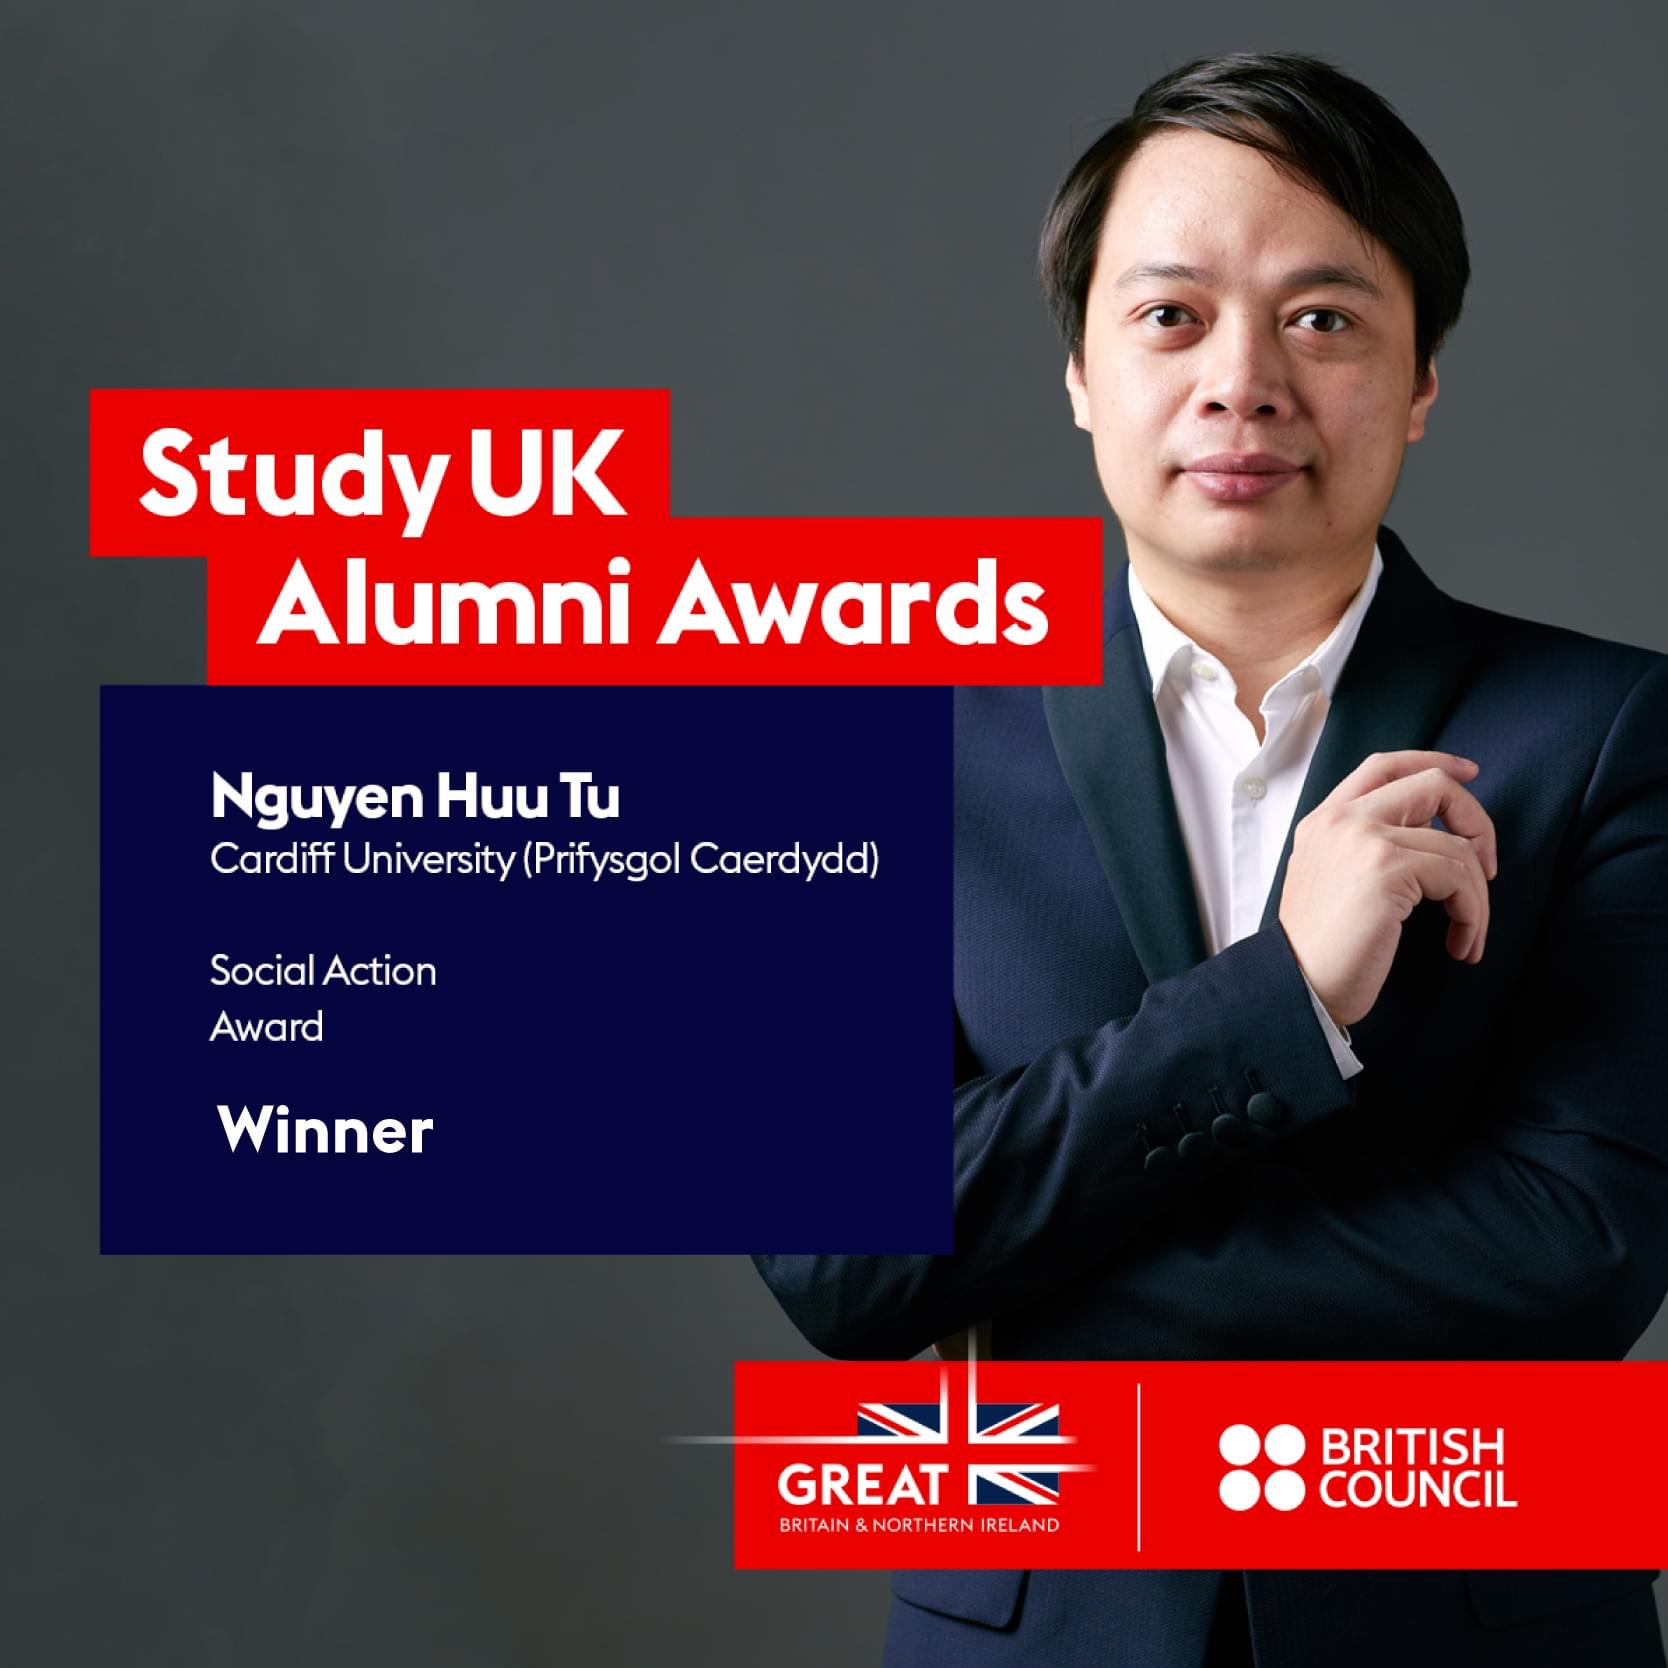 StudyUK Alumni awards winner graphic featuring Nguyen Huu Tu